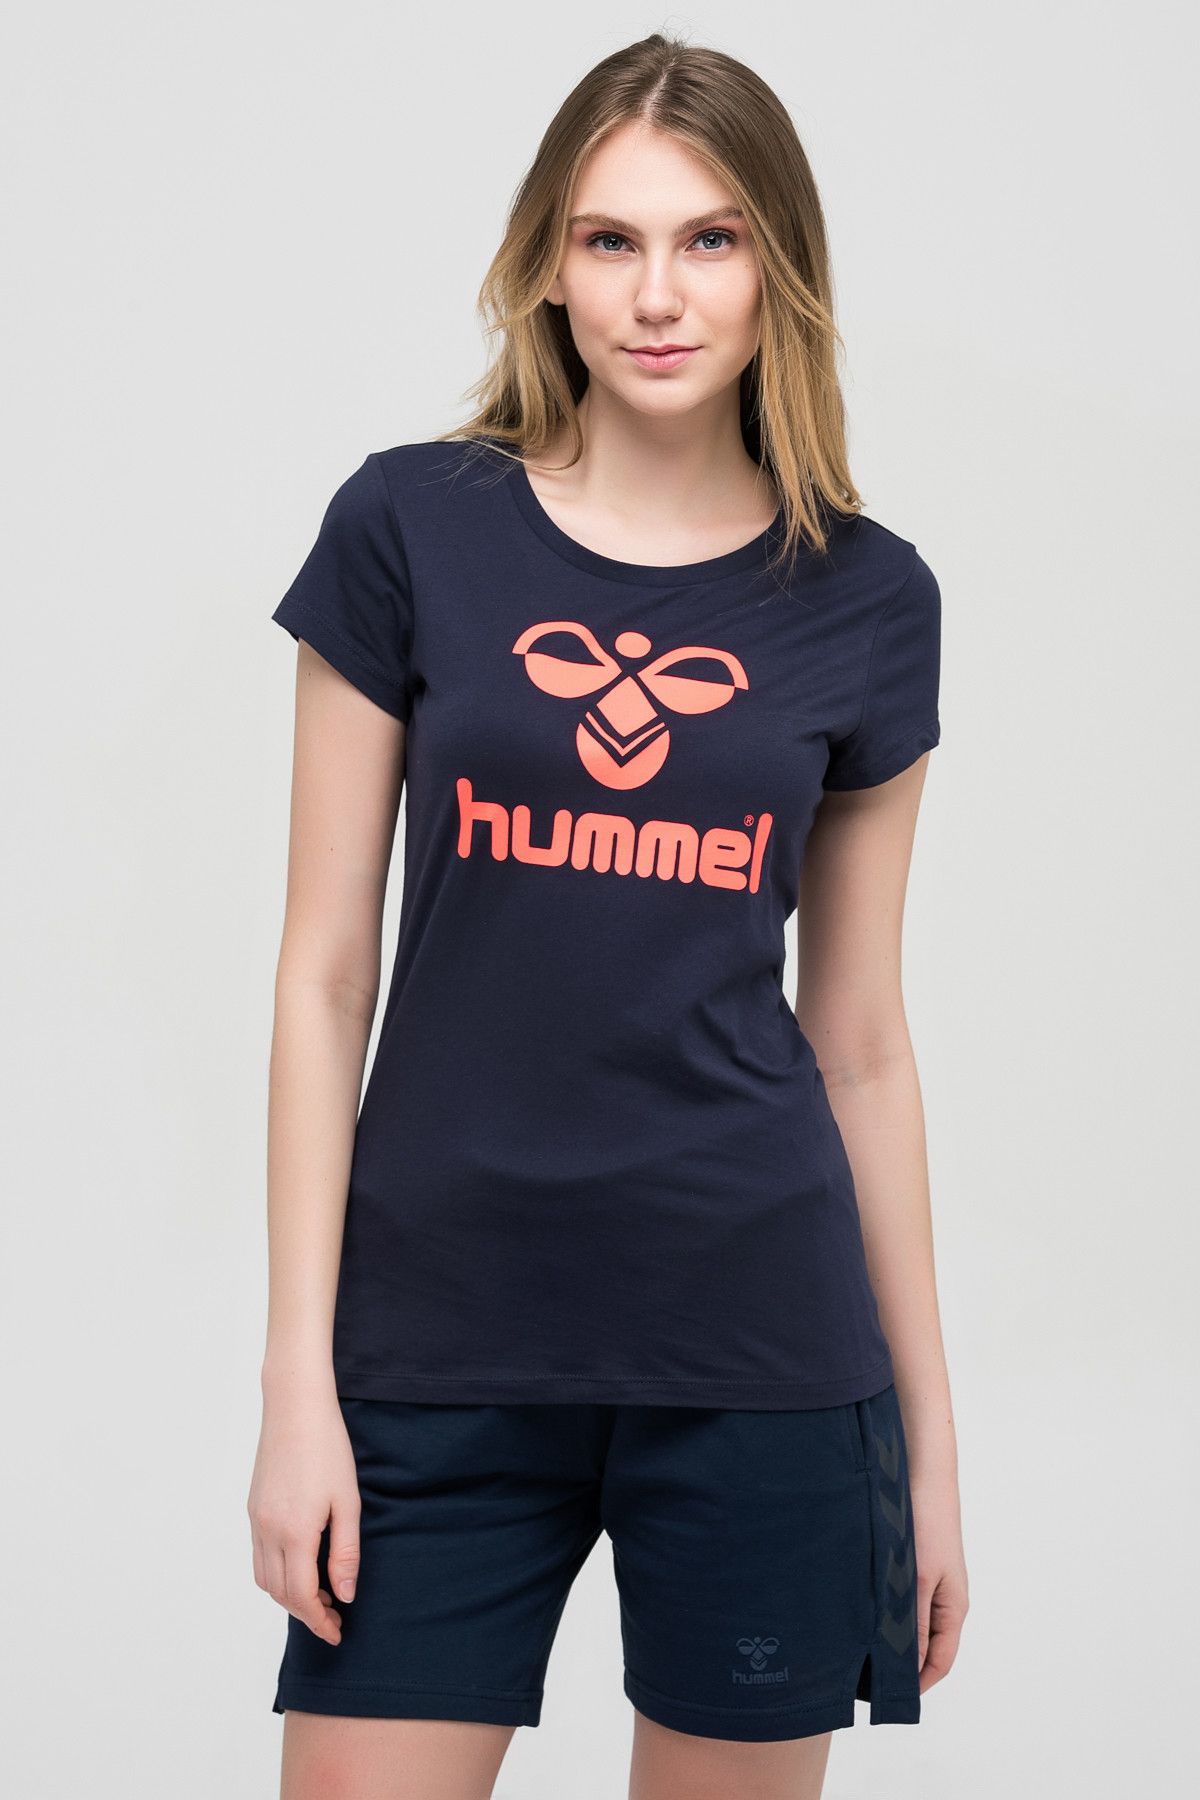 hummel Kadın T-shirt Classic Tee